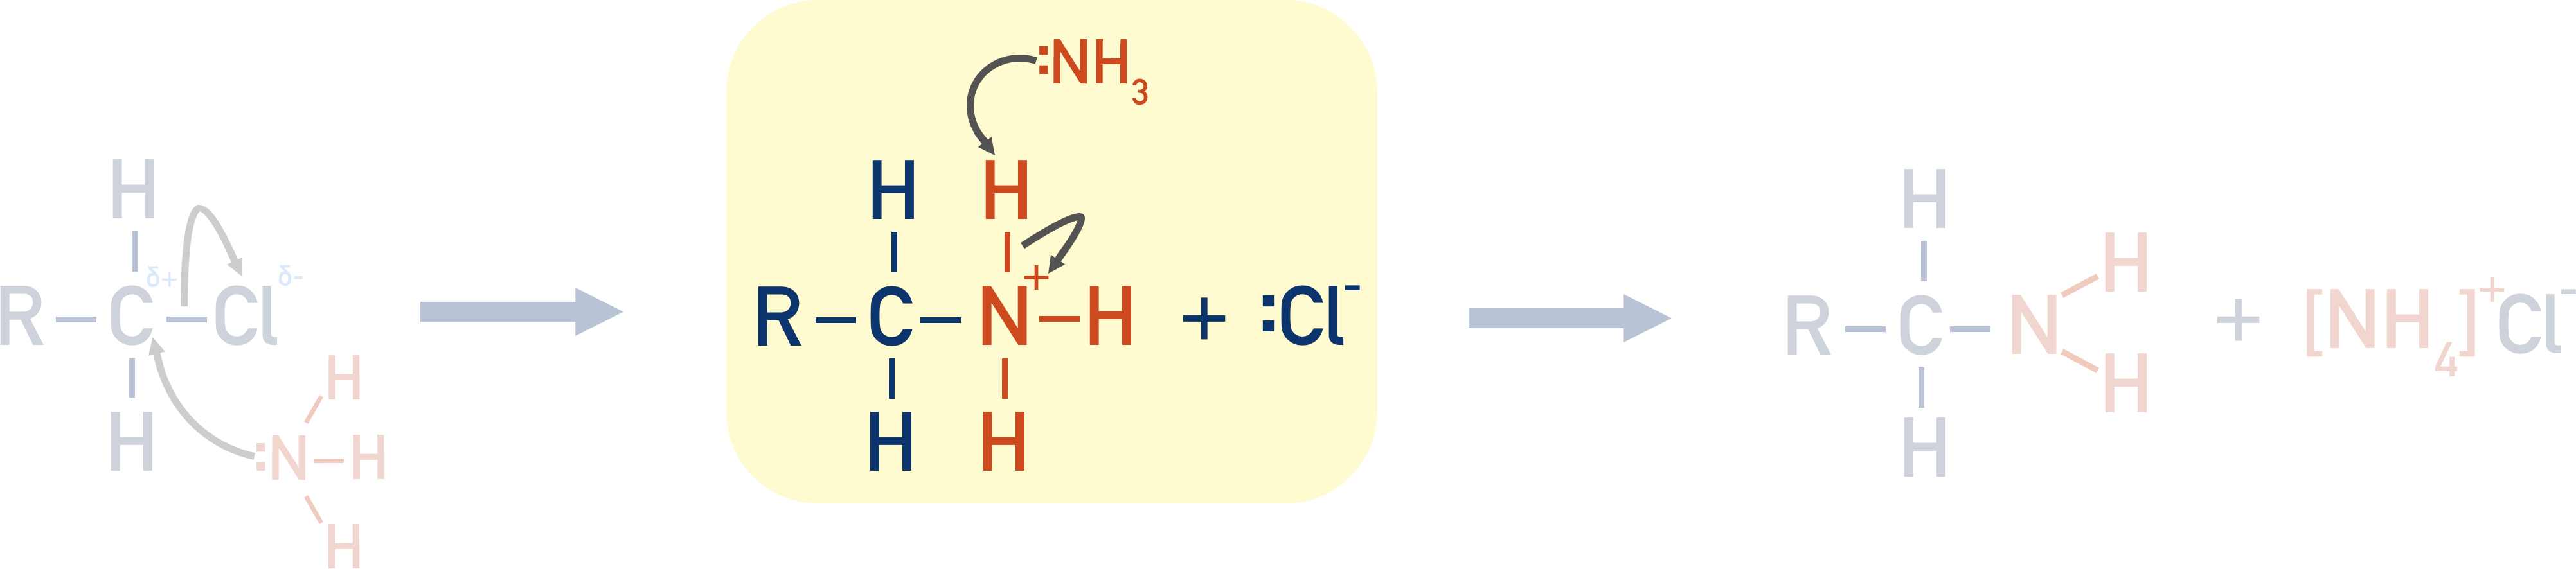 producing primary amine mechanism nucleophilic substitution halogenoalkane and ammonia step 2